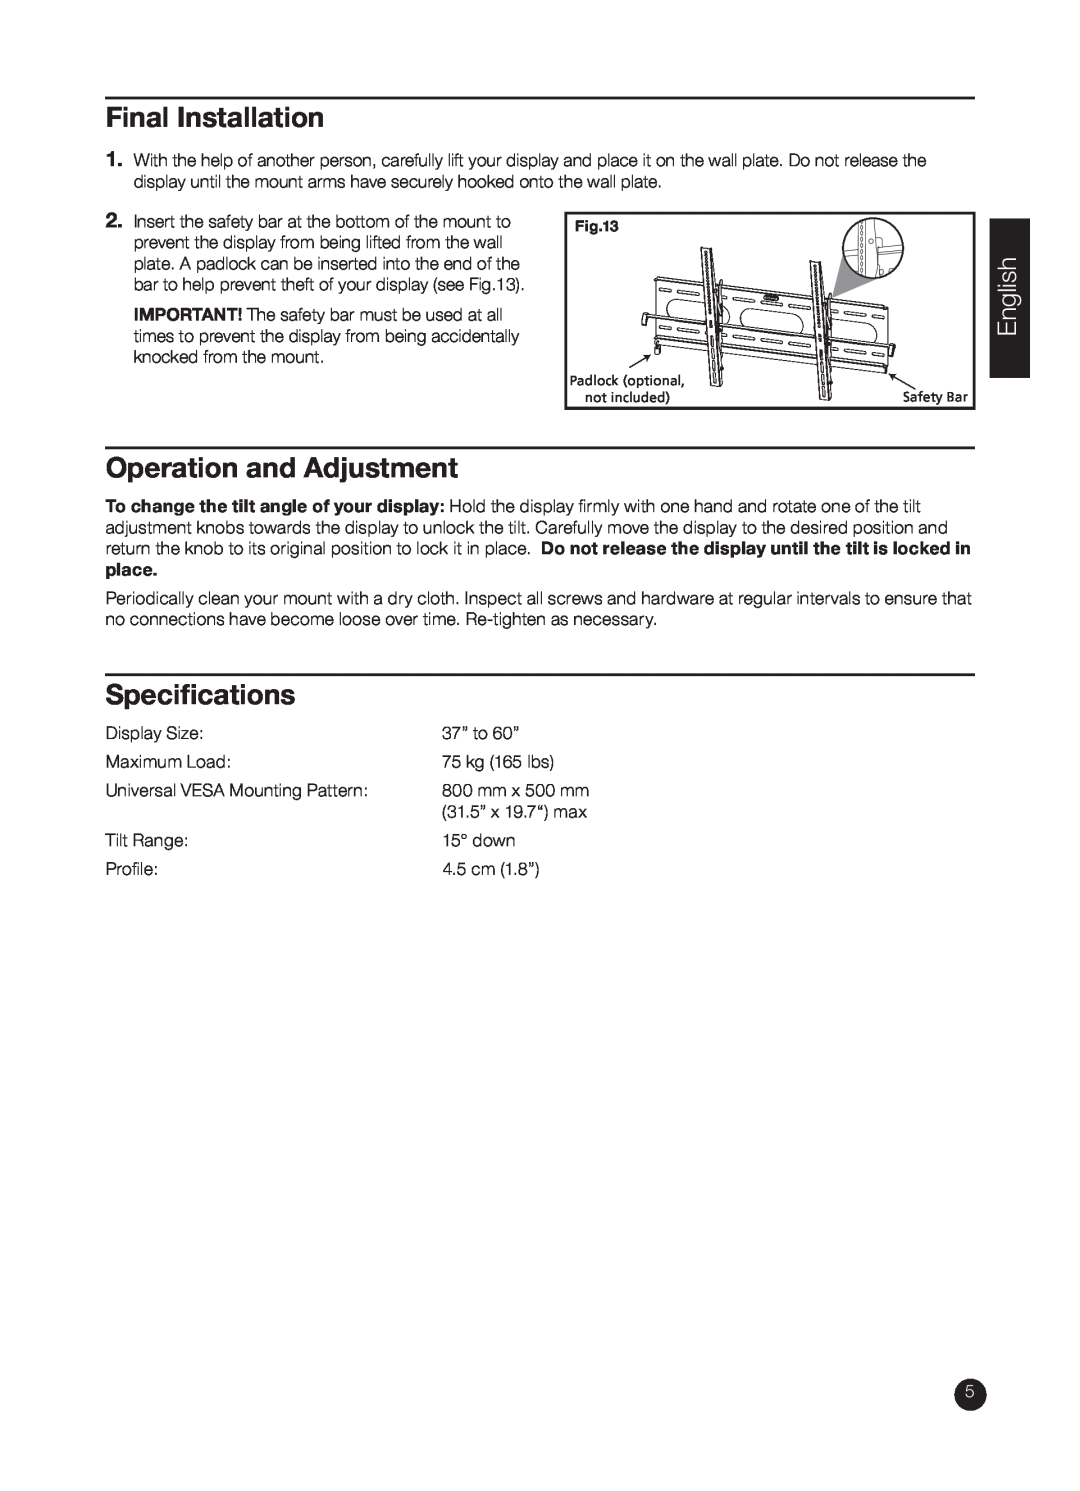 RCA RCA MAF85BKR installation manual Final Installation, Operation and Adjustment, Speciﬁcations, English 